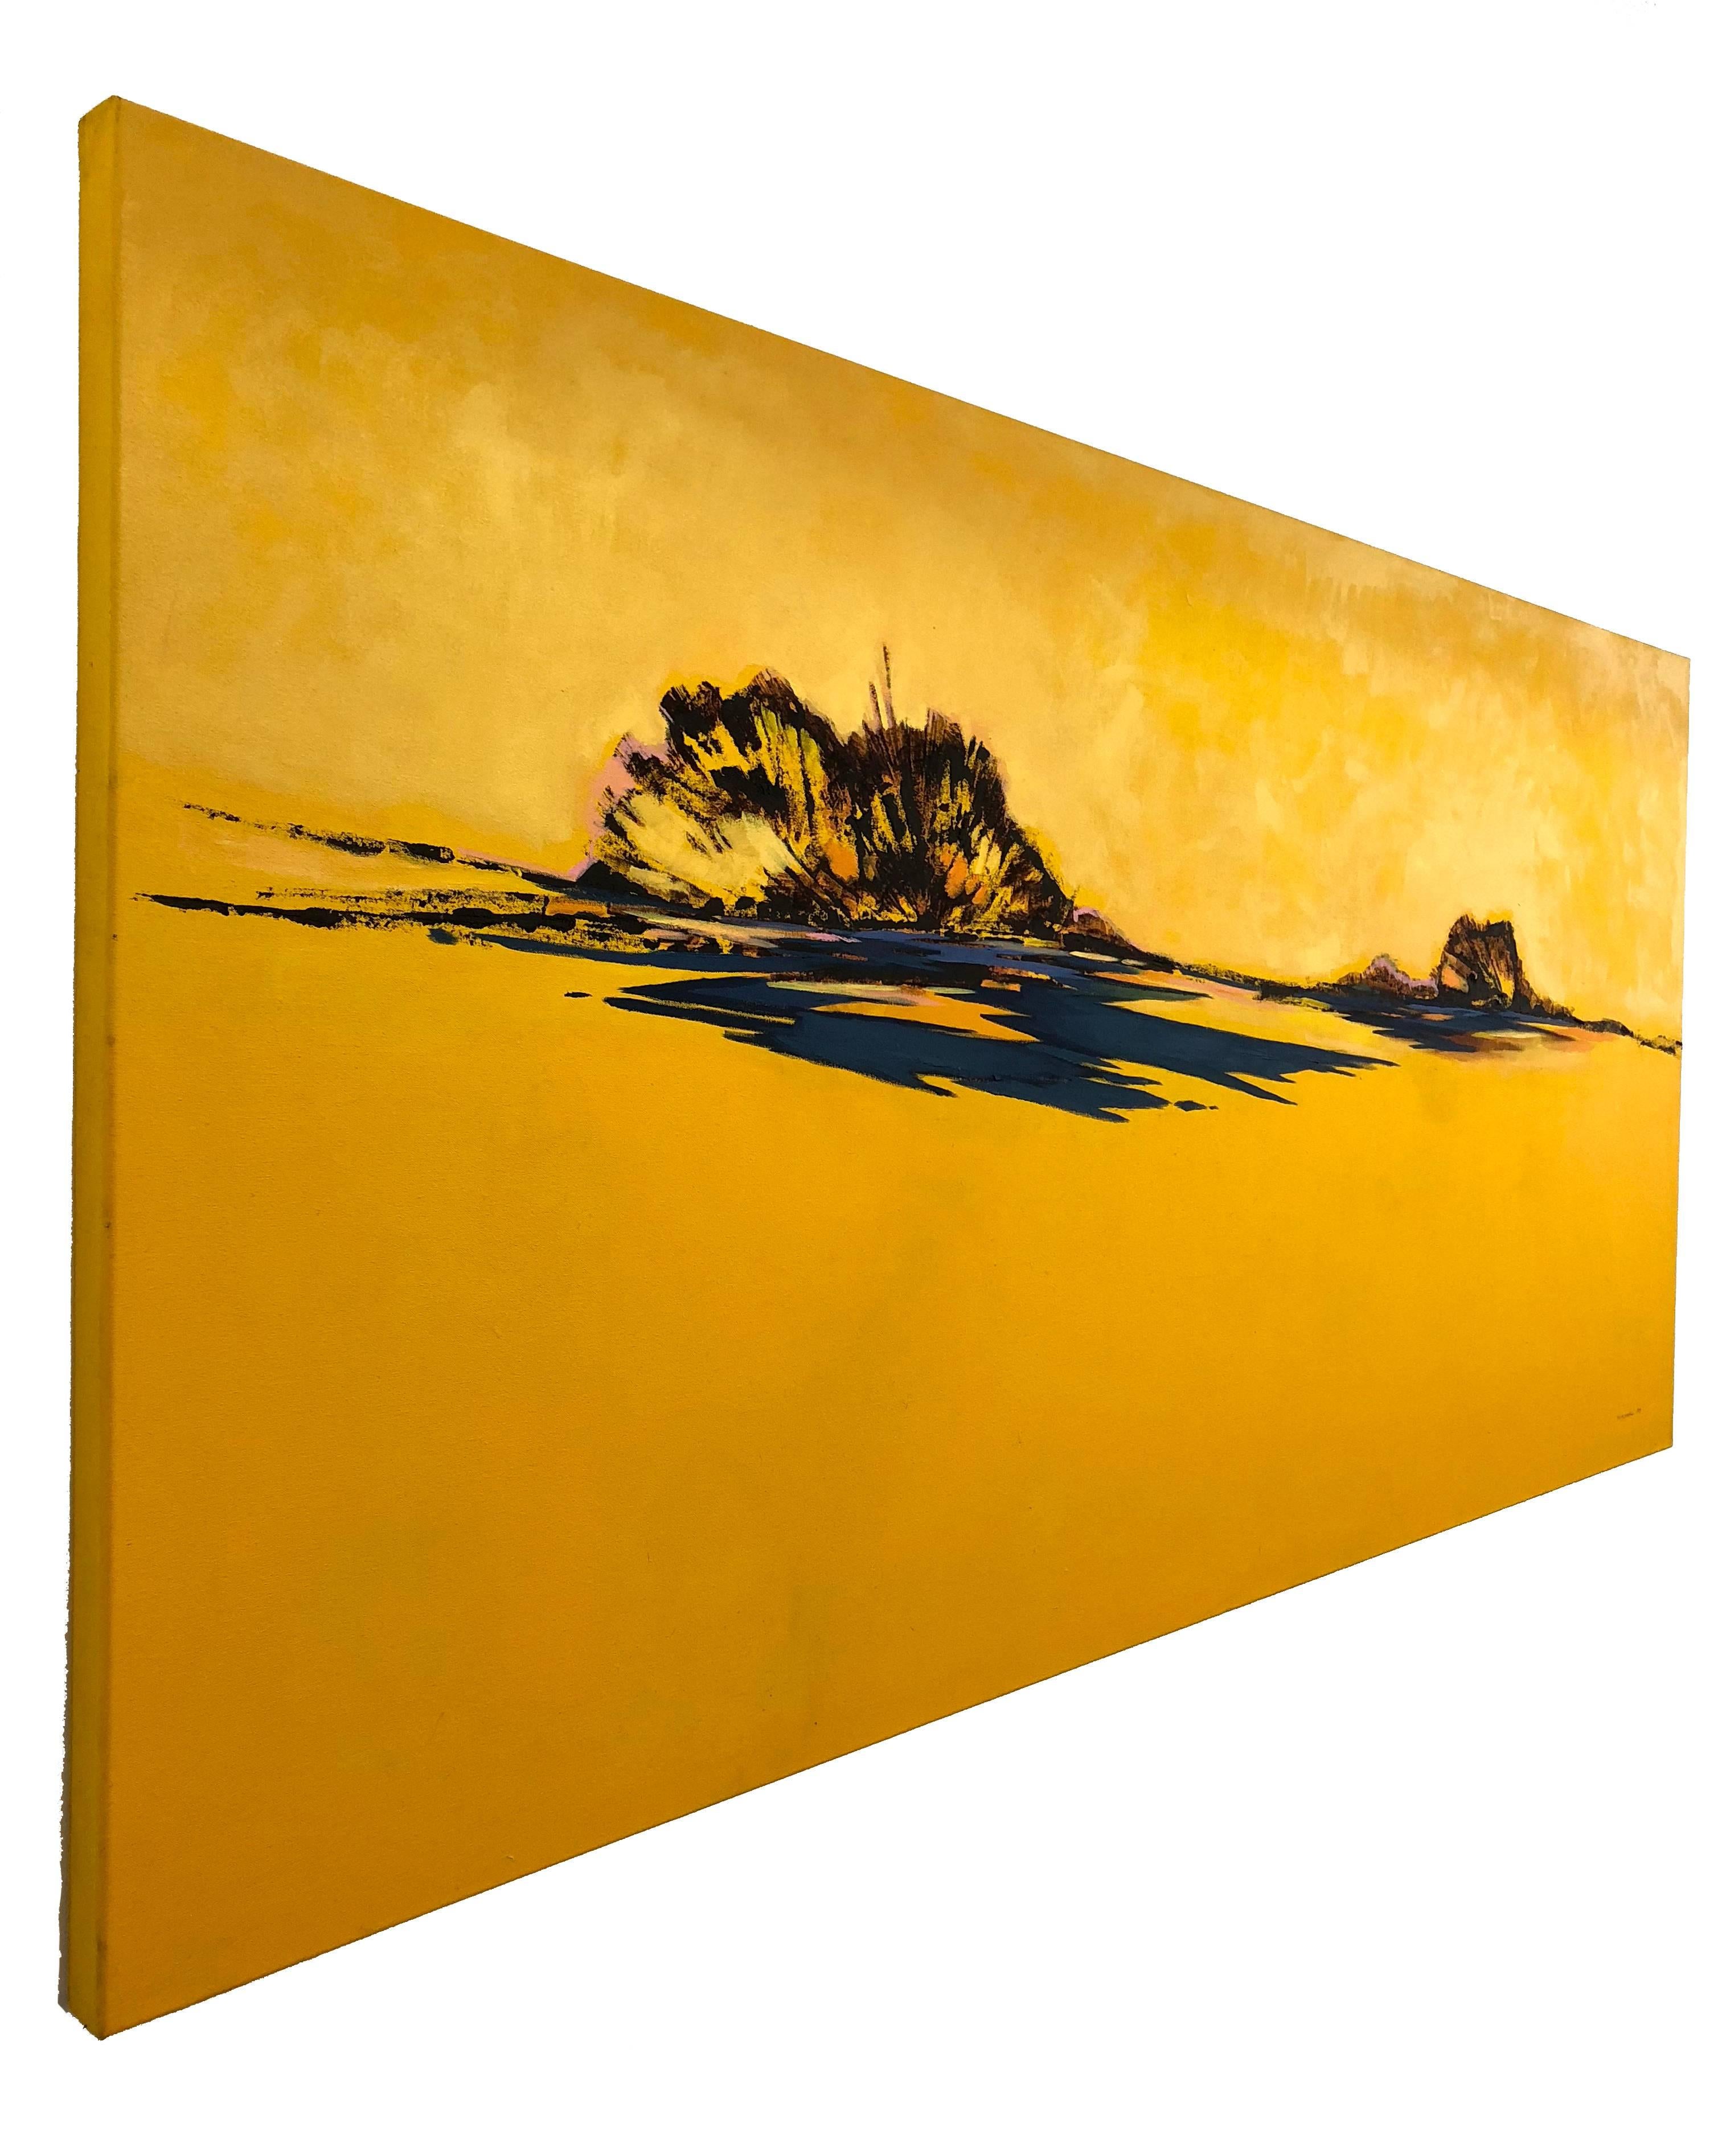 Sunshine Again, horizontales gelbes abstraktes Landschaftsgemälde, Öl auf Leinwand – Painting von Maria Jose Concha